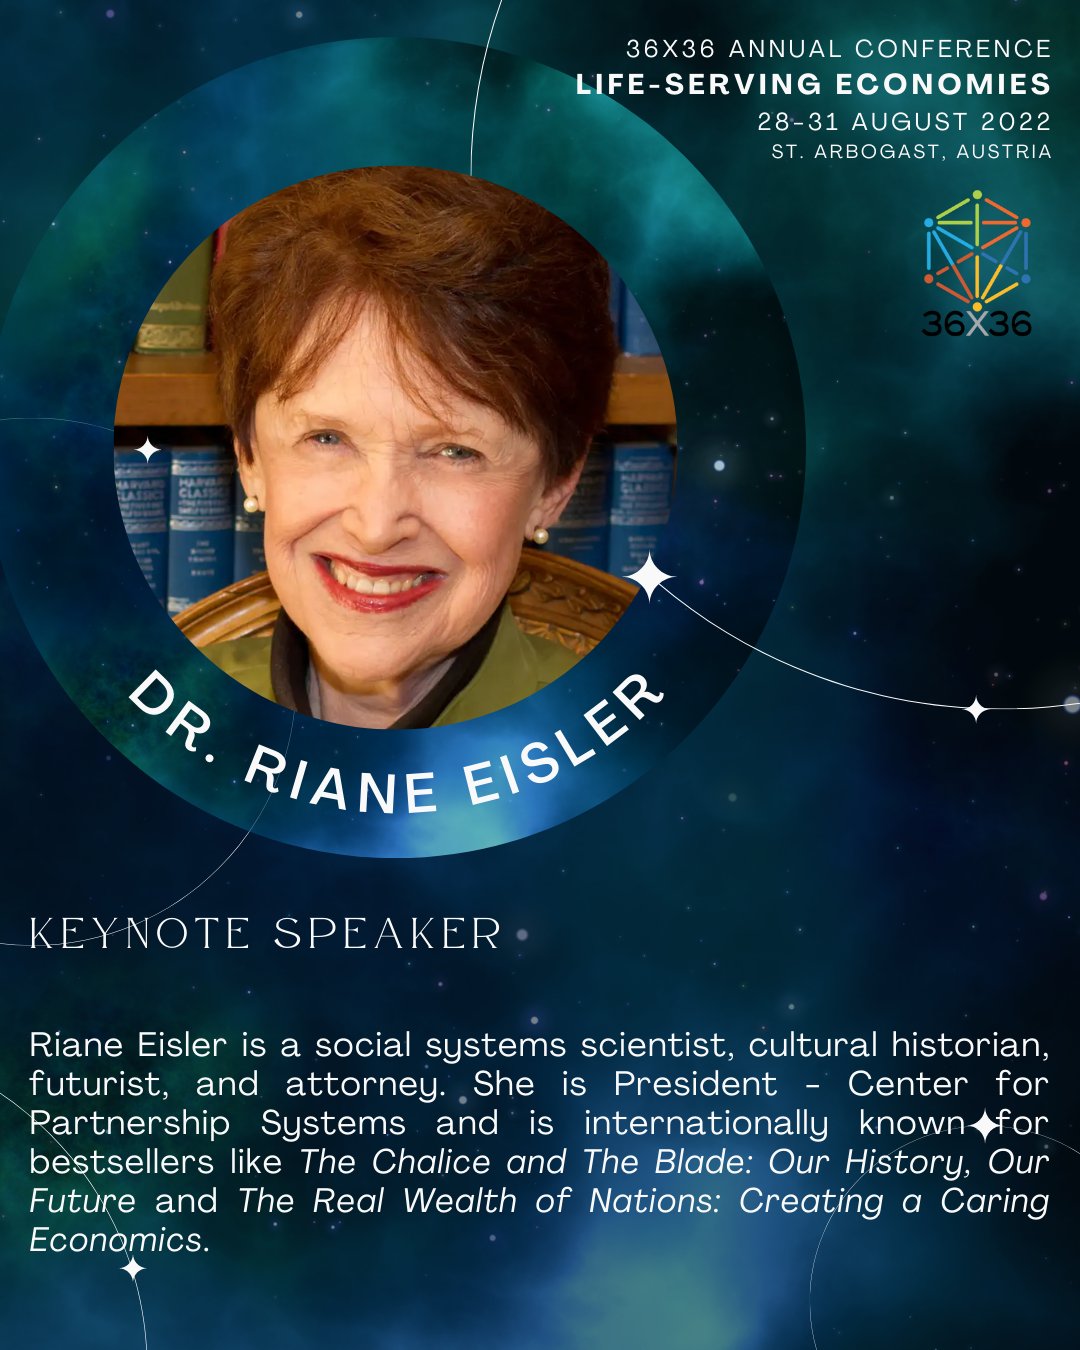 Riane Eisler keynotes Life-Serving Economies conference 